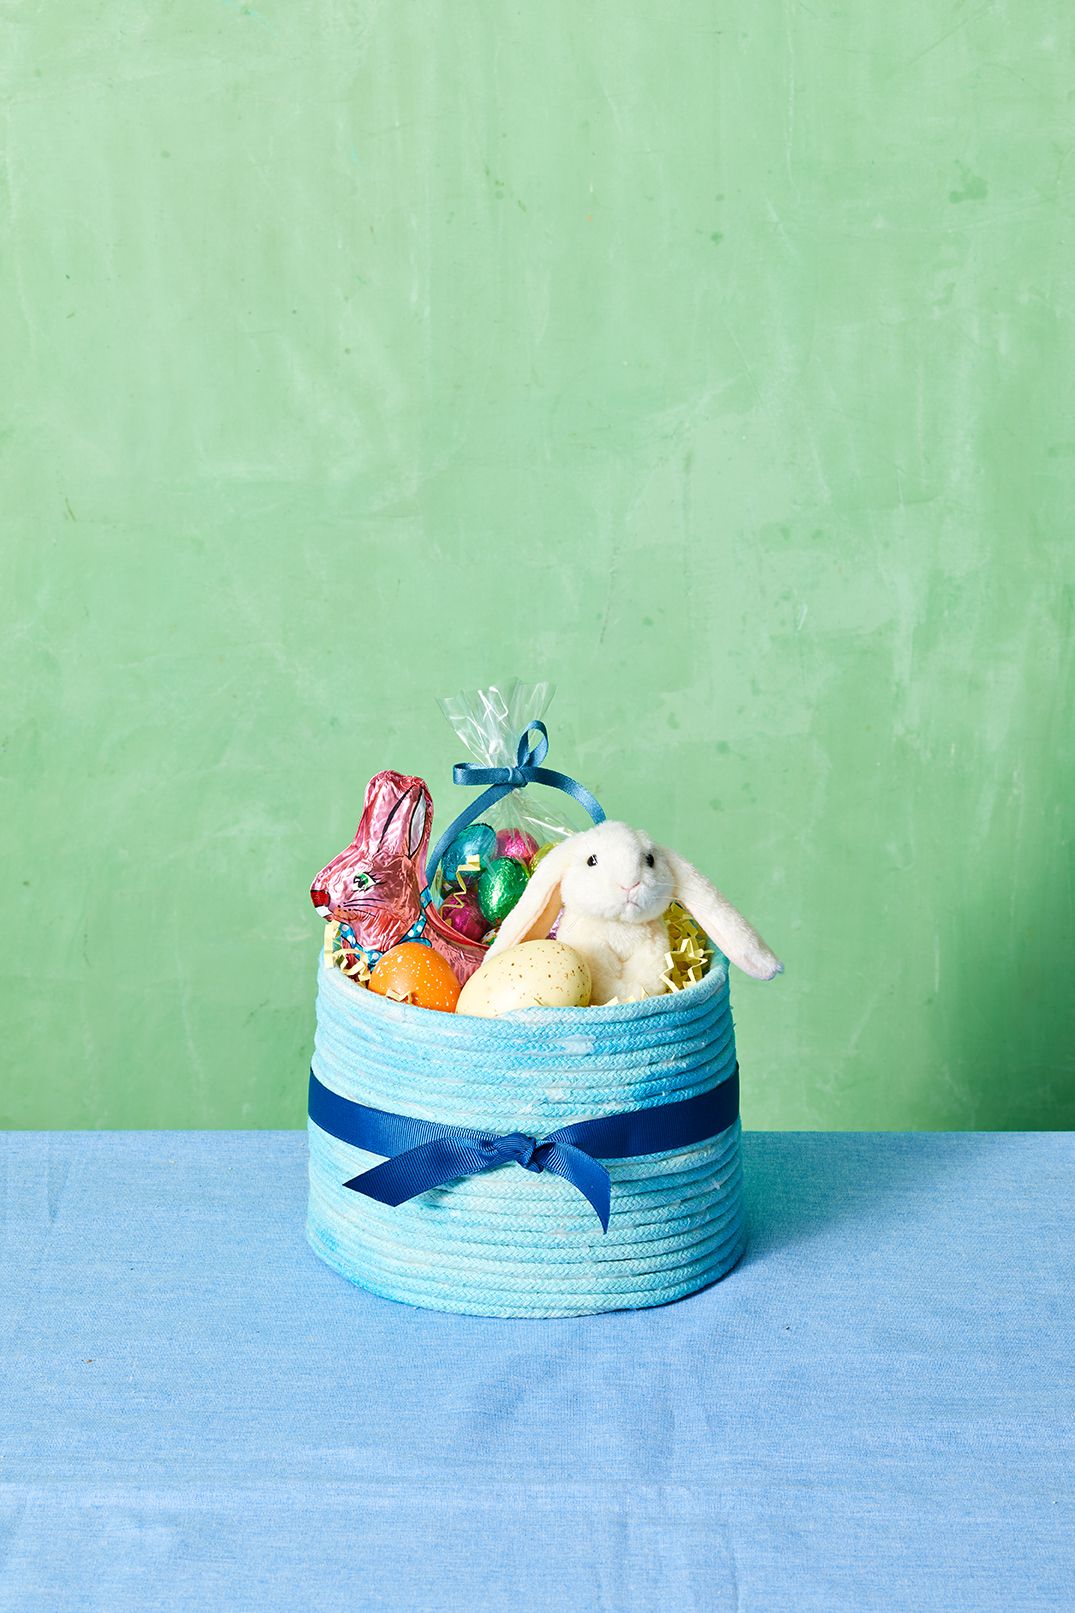 easy edible may basket ideas